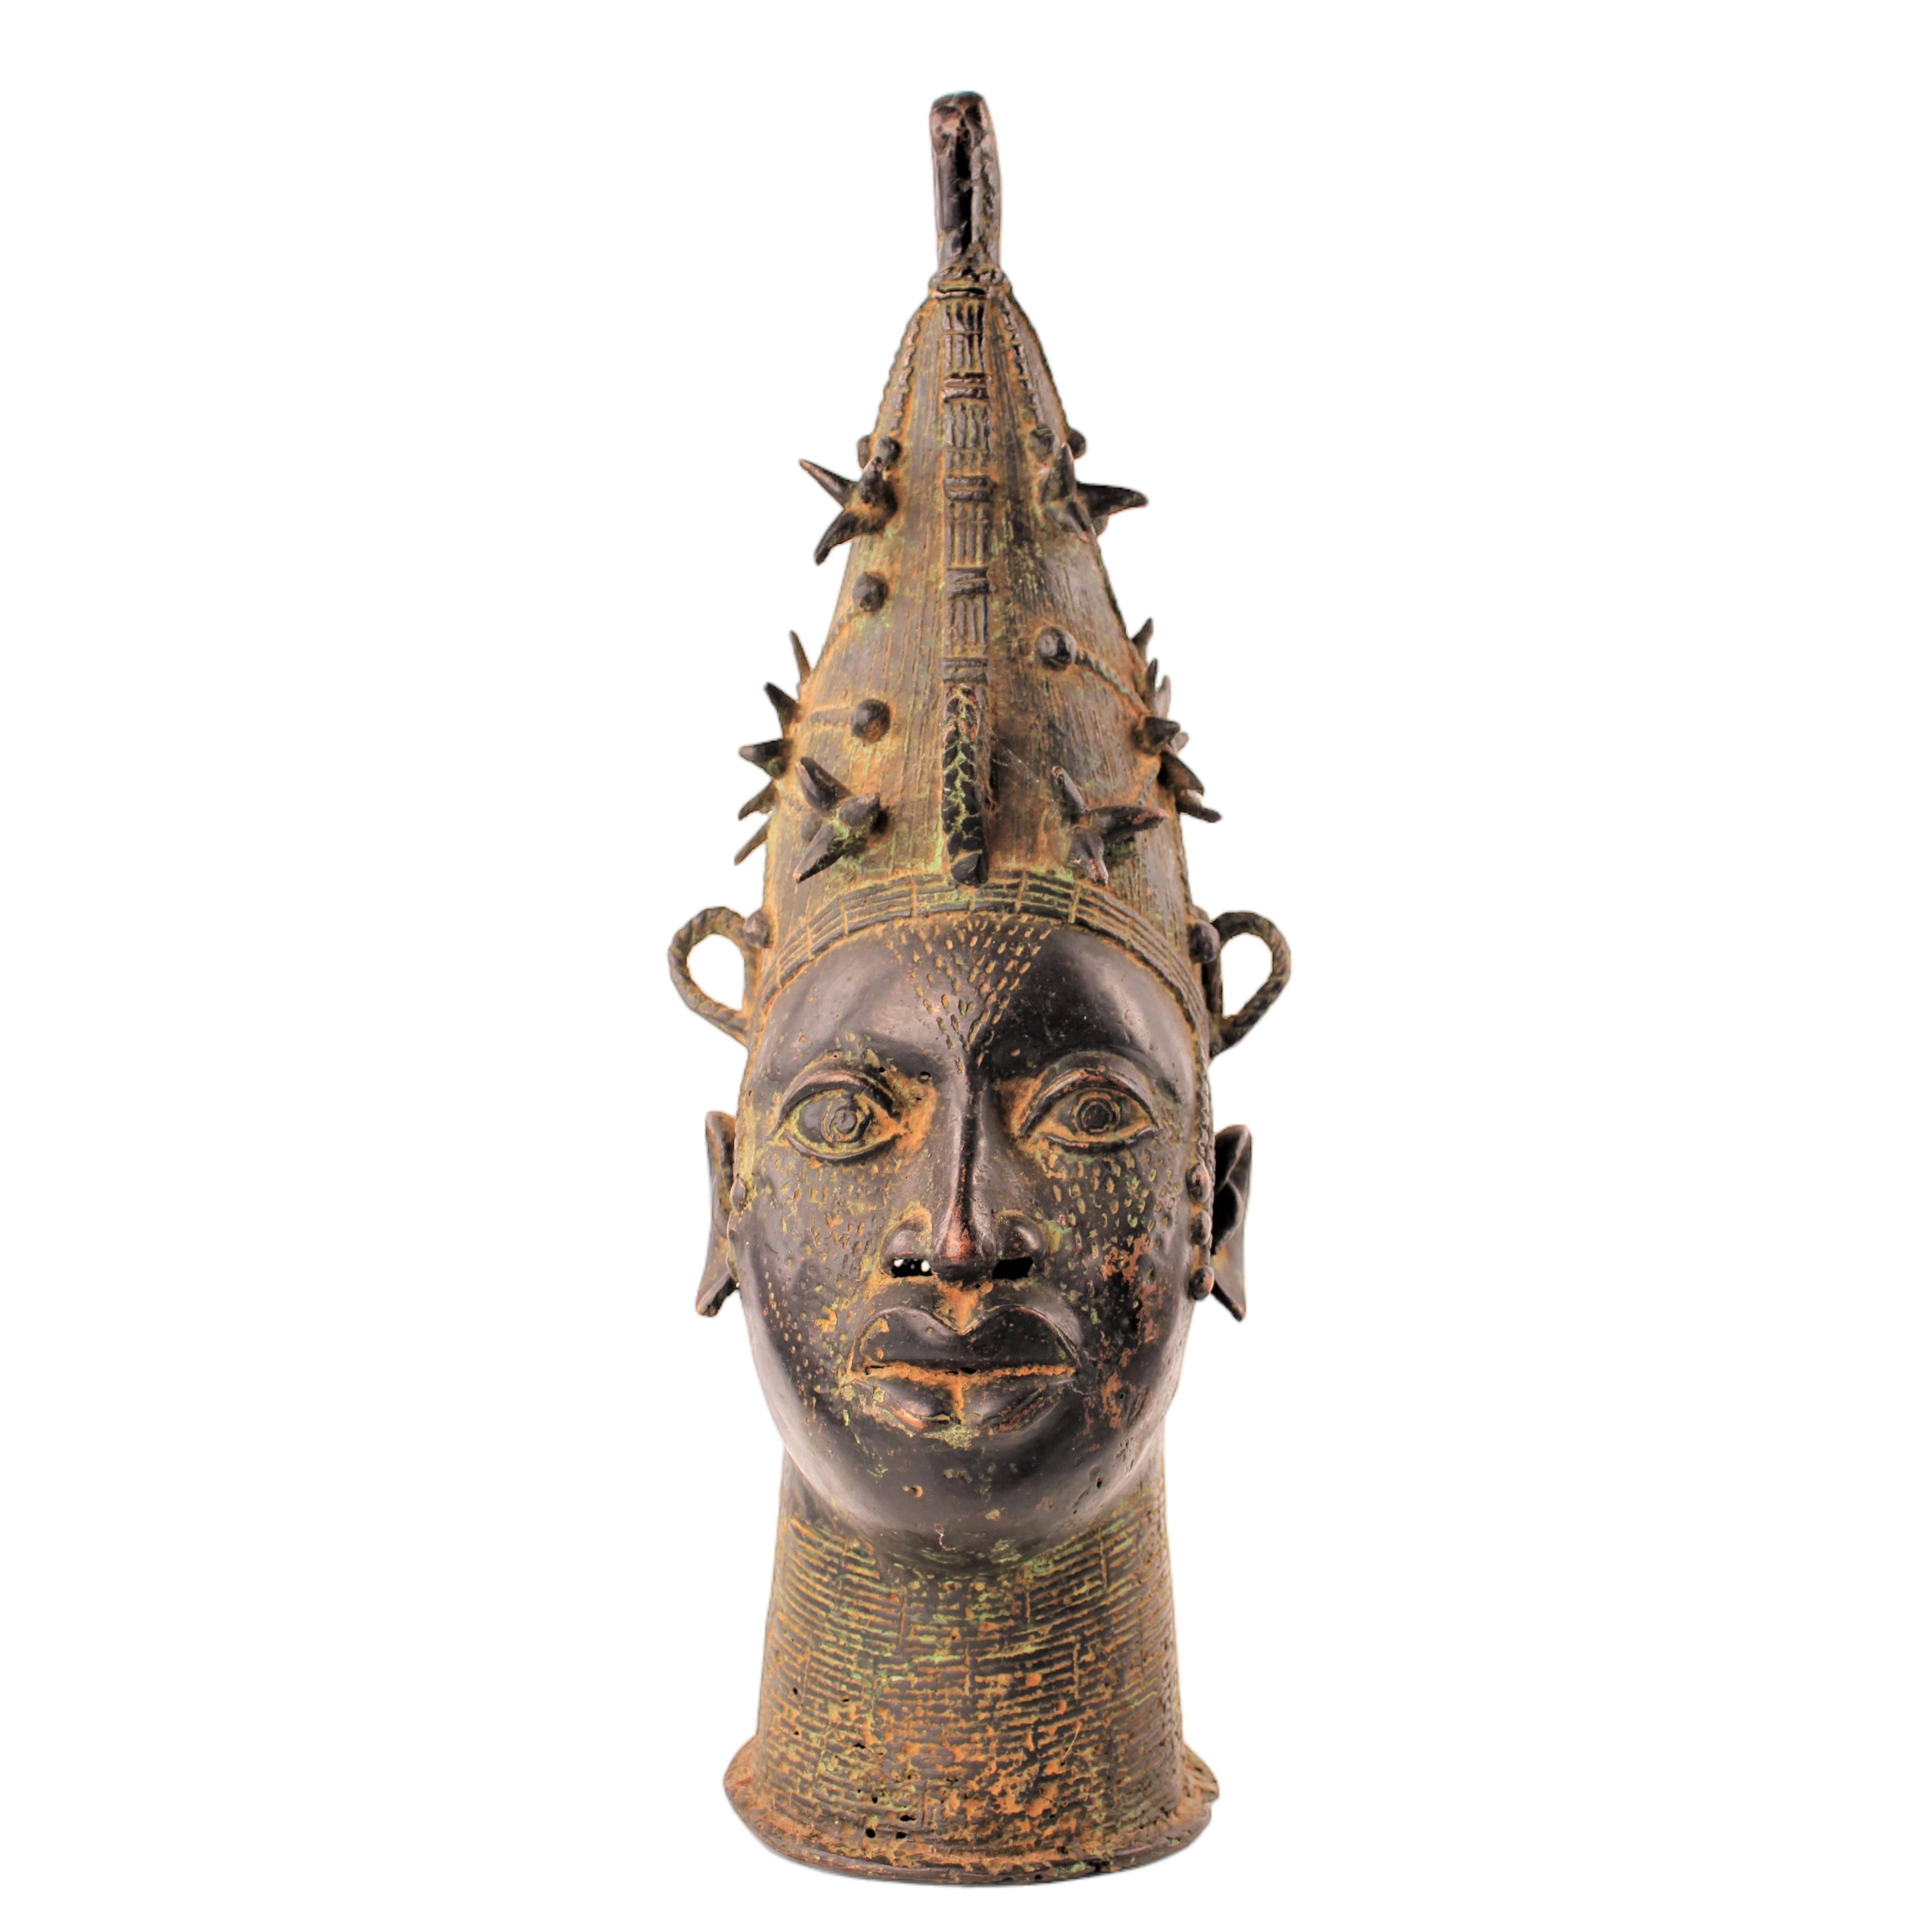 Yoruba Tribe Heads ~20.5" Tall - Heads